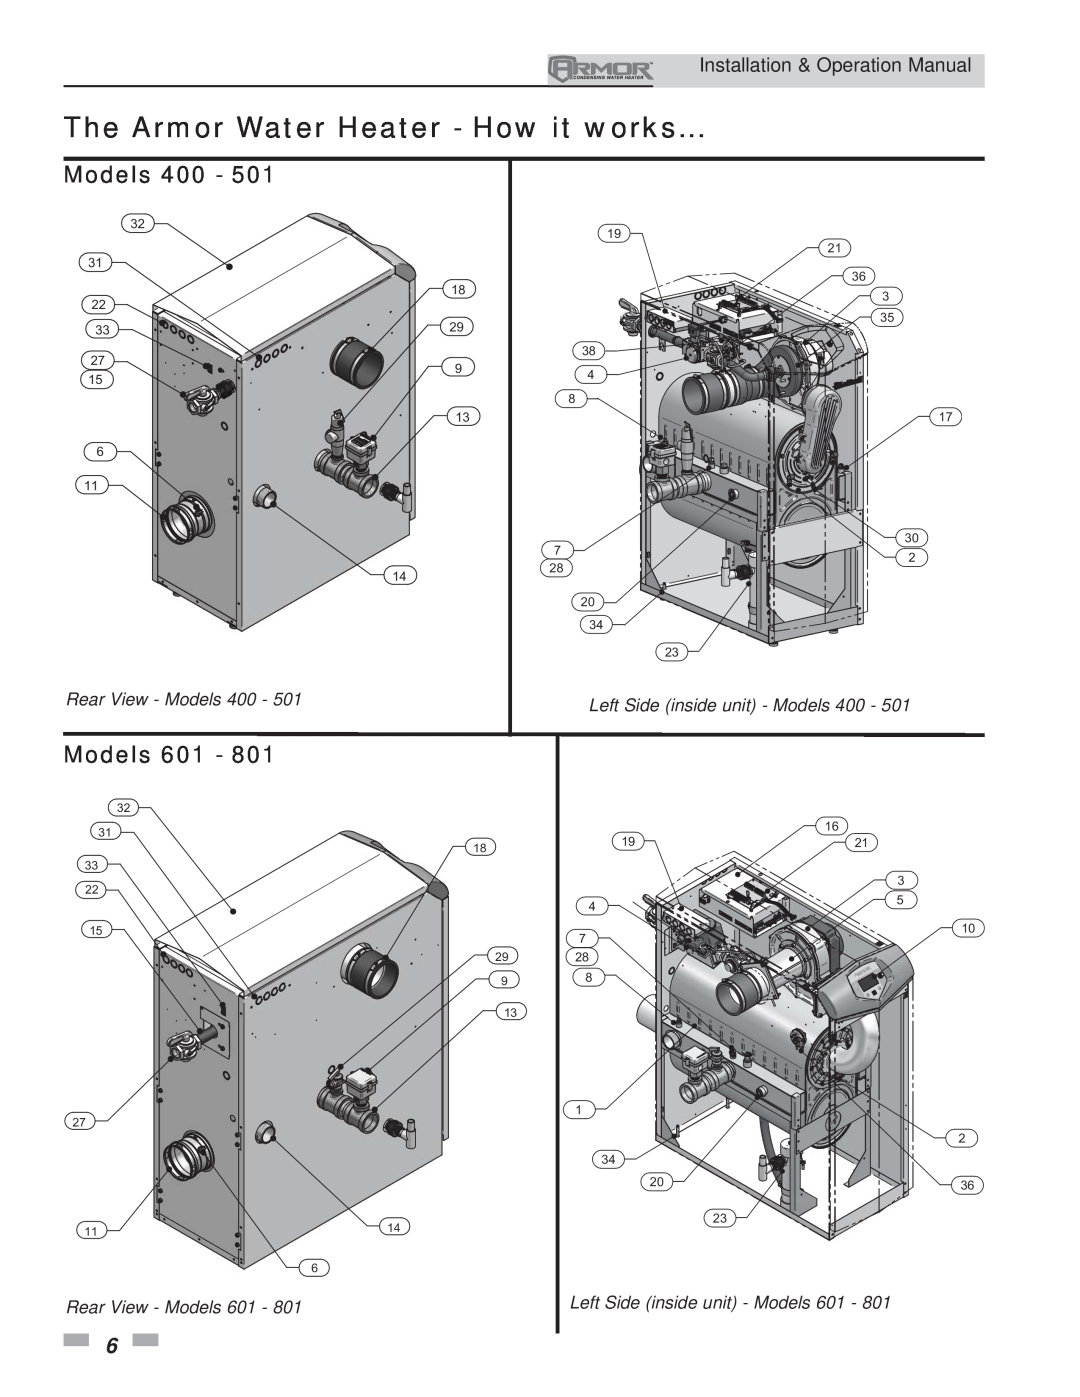 Lochinvar 151 operation manual Rear View - Models 400, Left Side inside unit - Models 400, Rear View - Models 601 